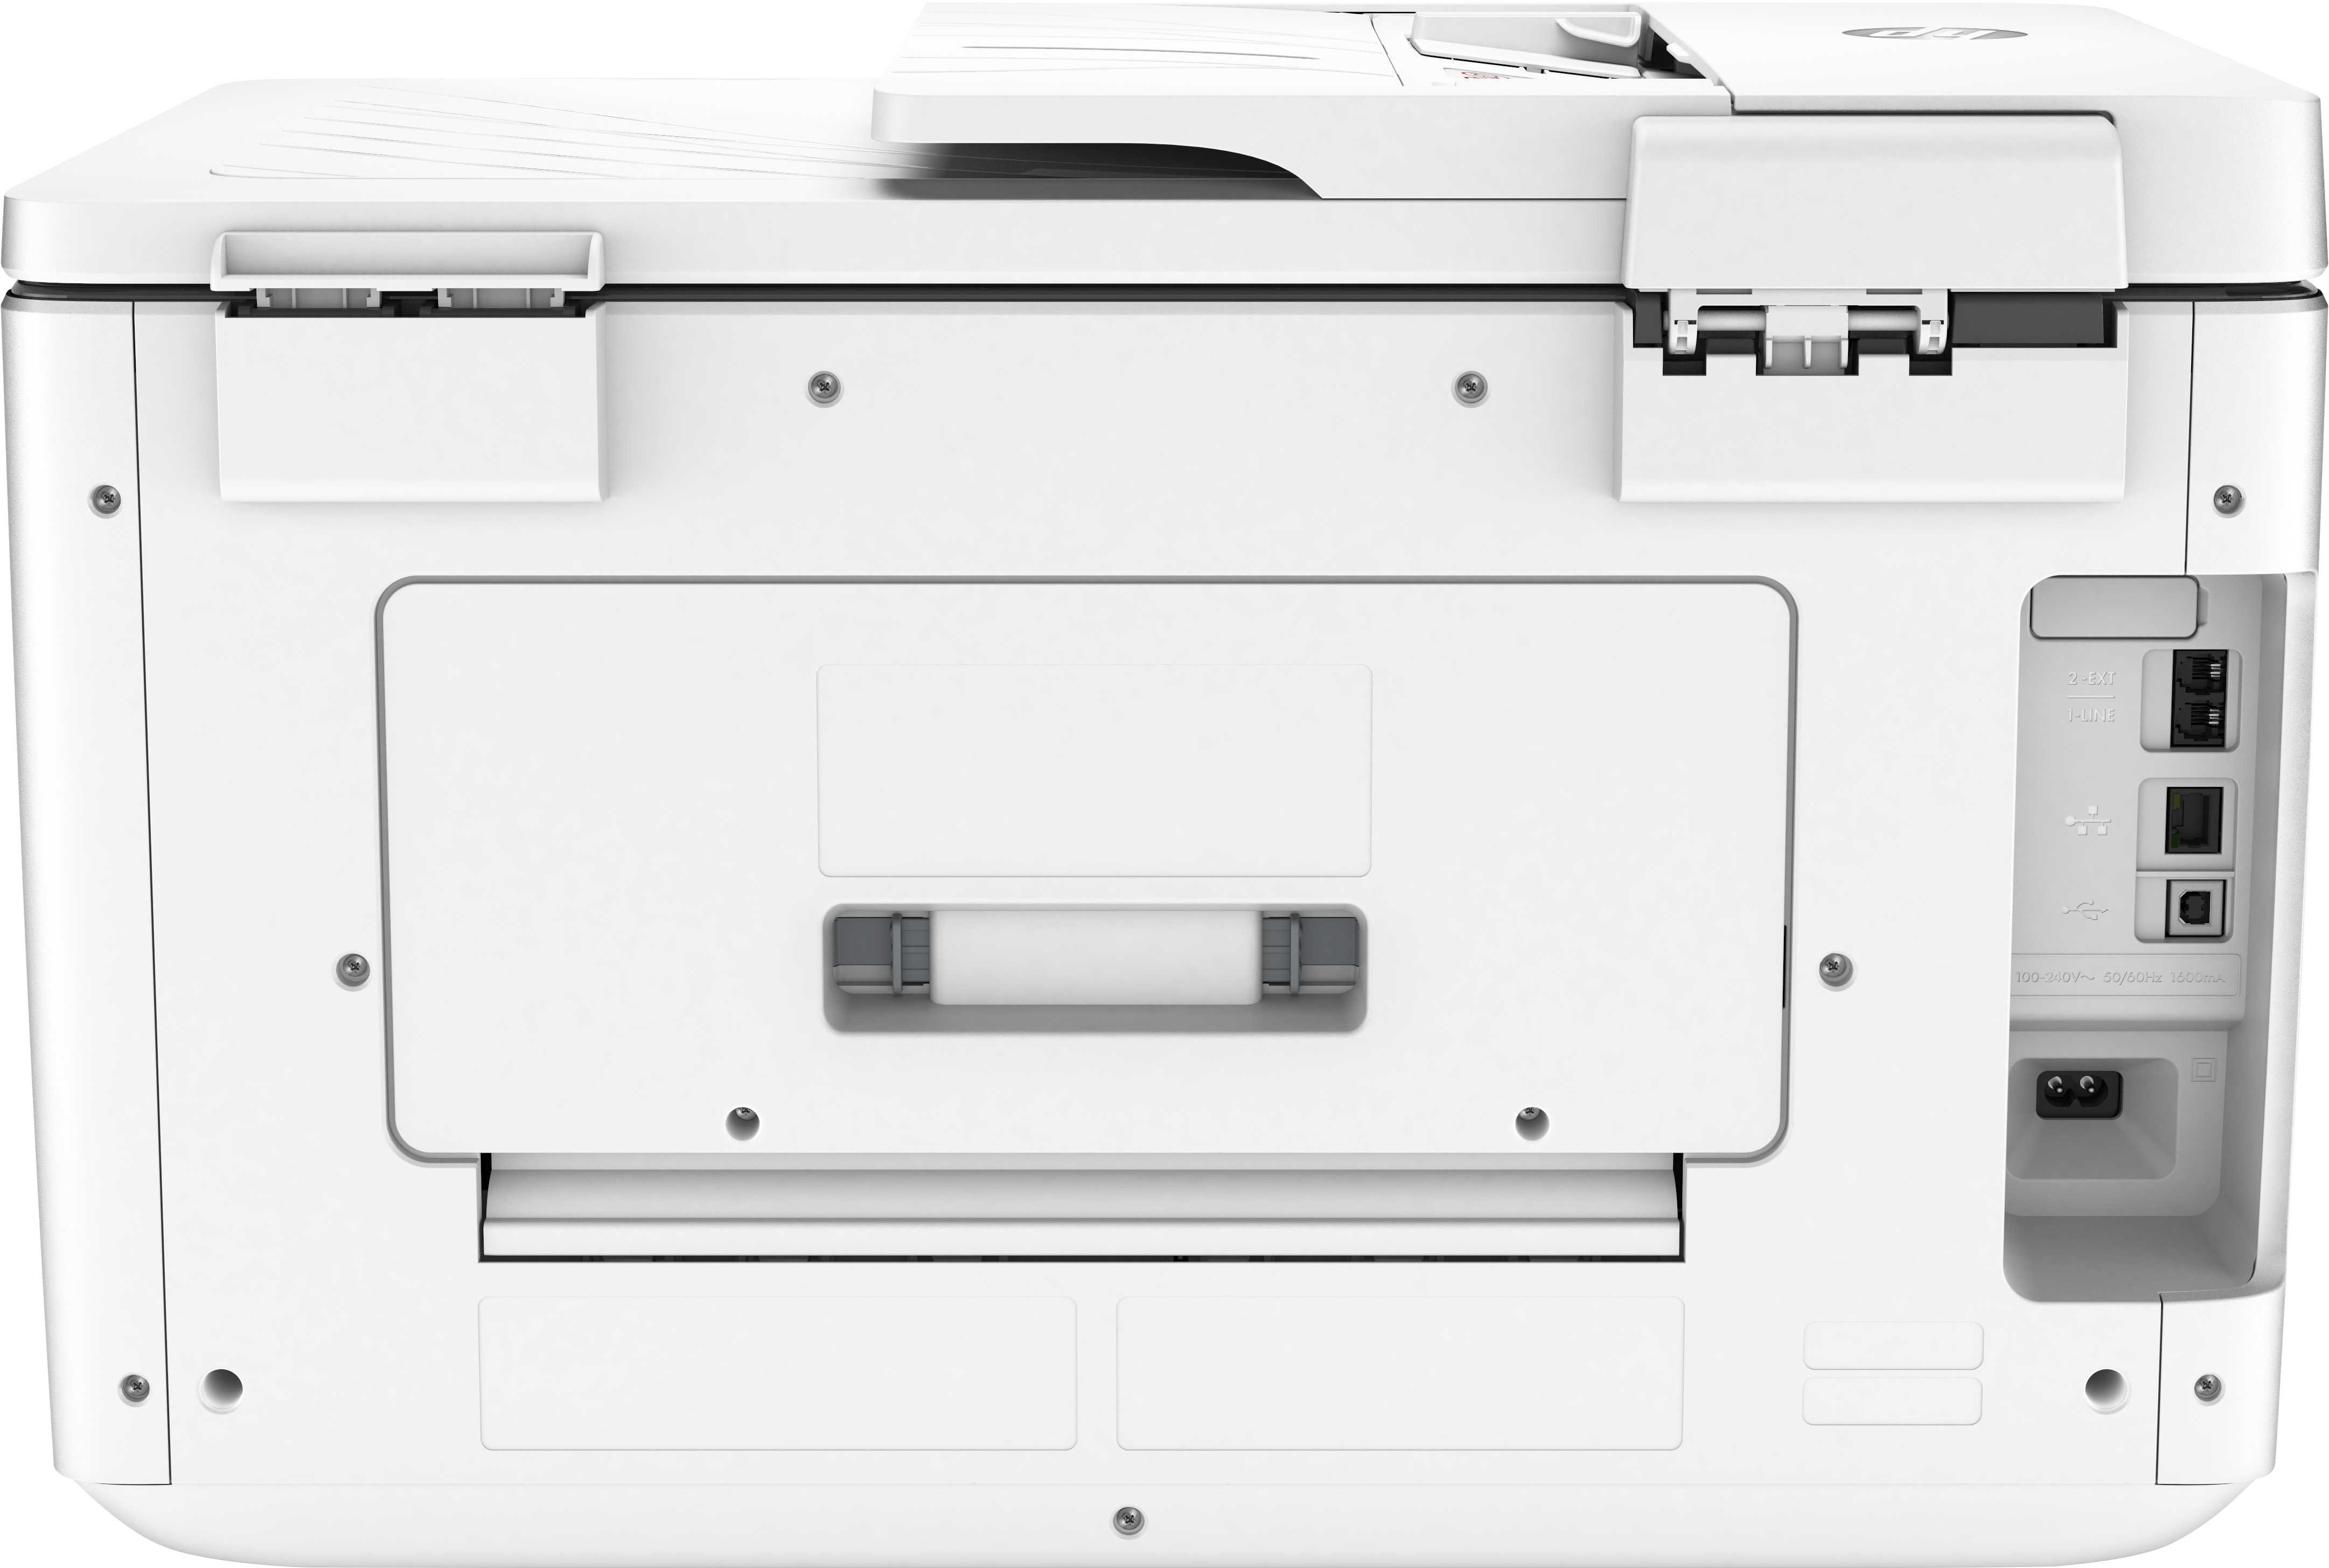 HP OfficeJet Pro 7740 HP Tintenstrahldruck 4-in-1 WLAN Großformat-Multifunktionsdrucker Netzwerkfähig